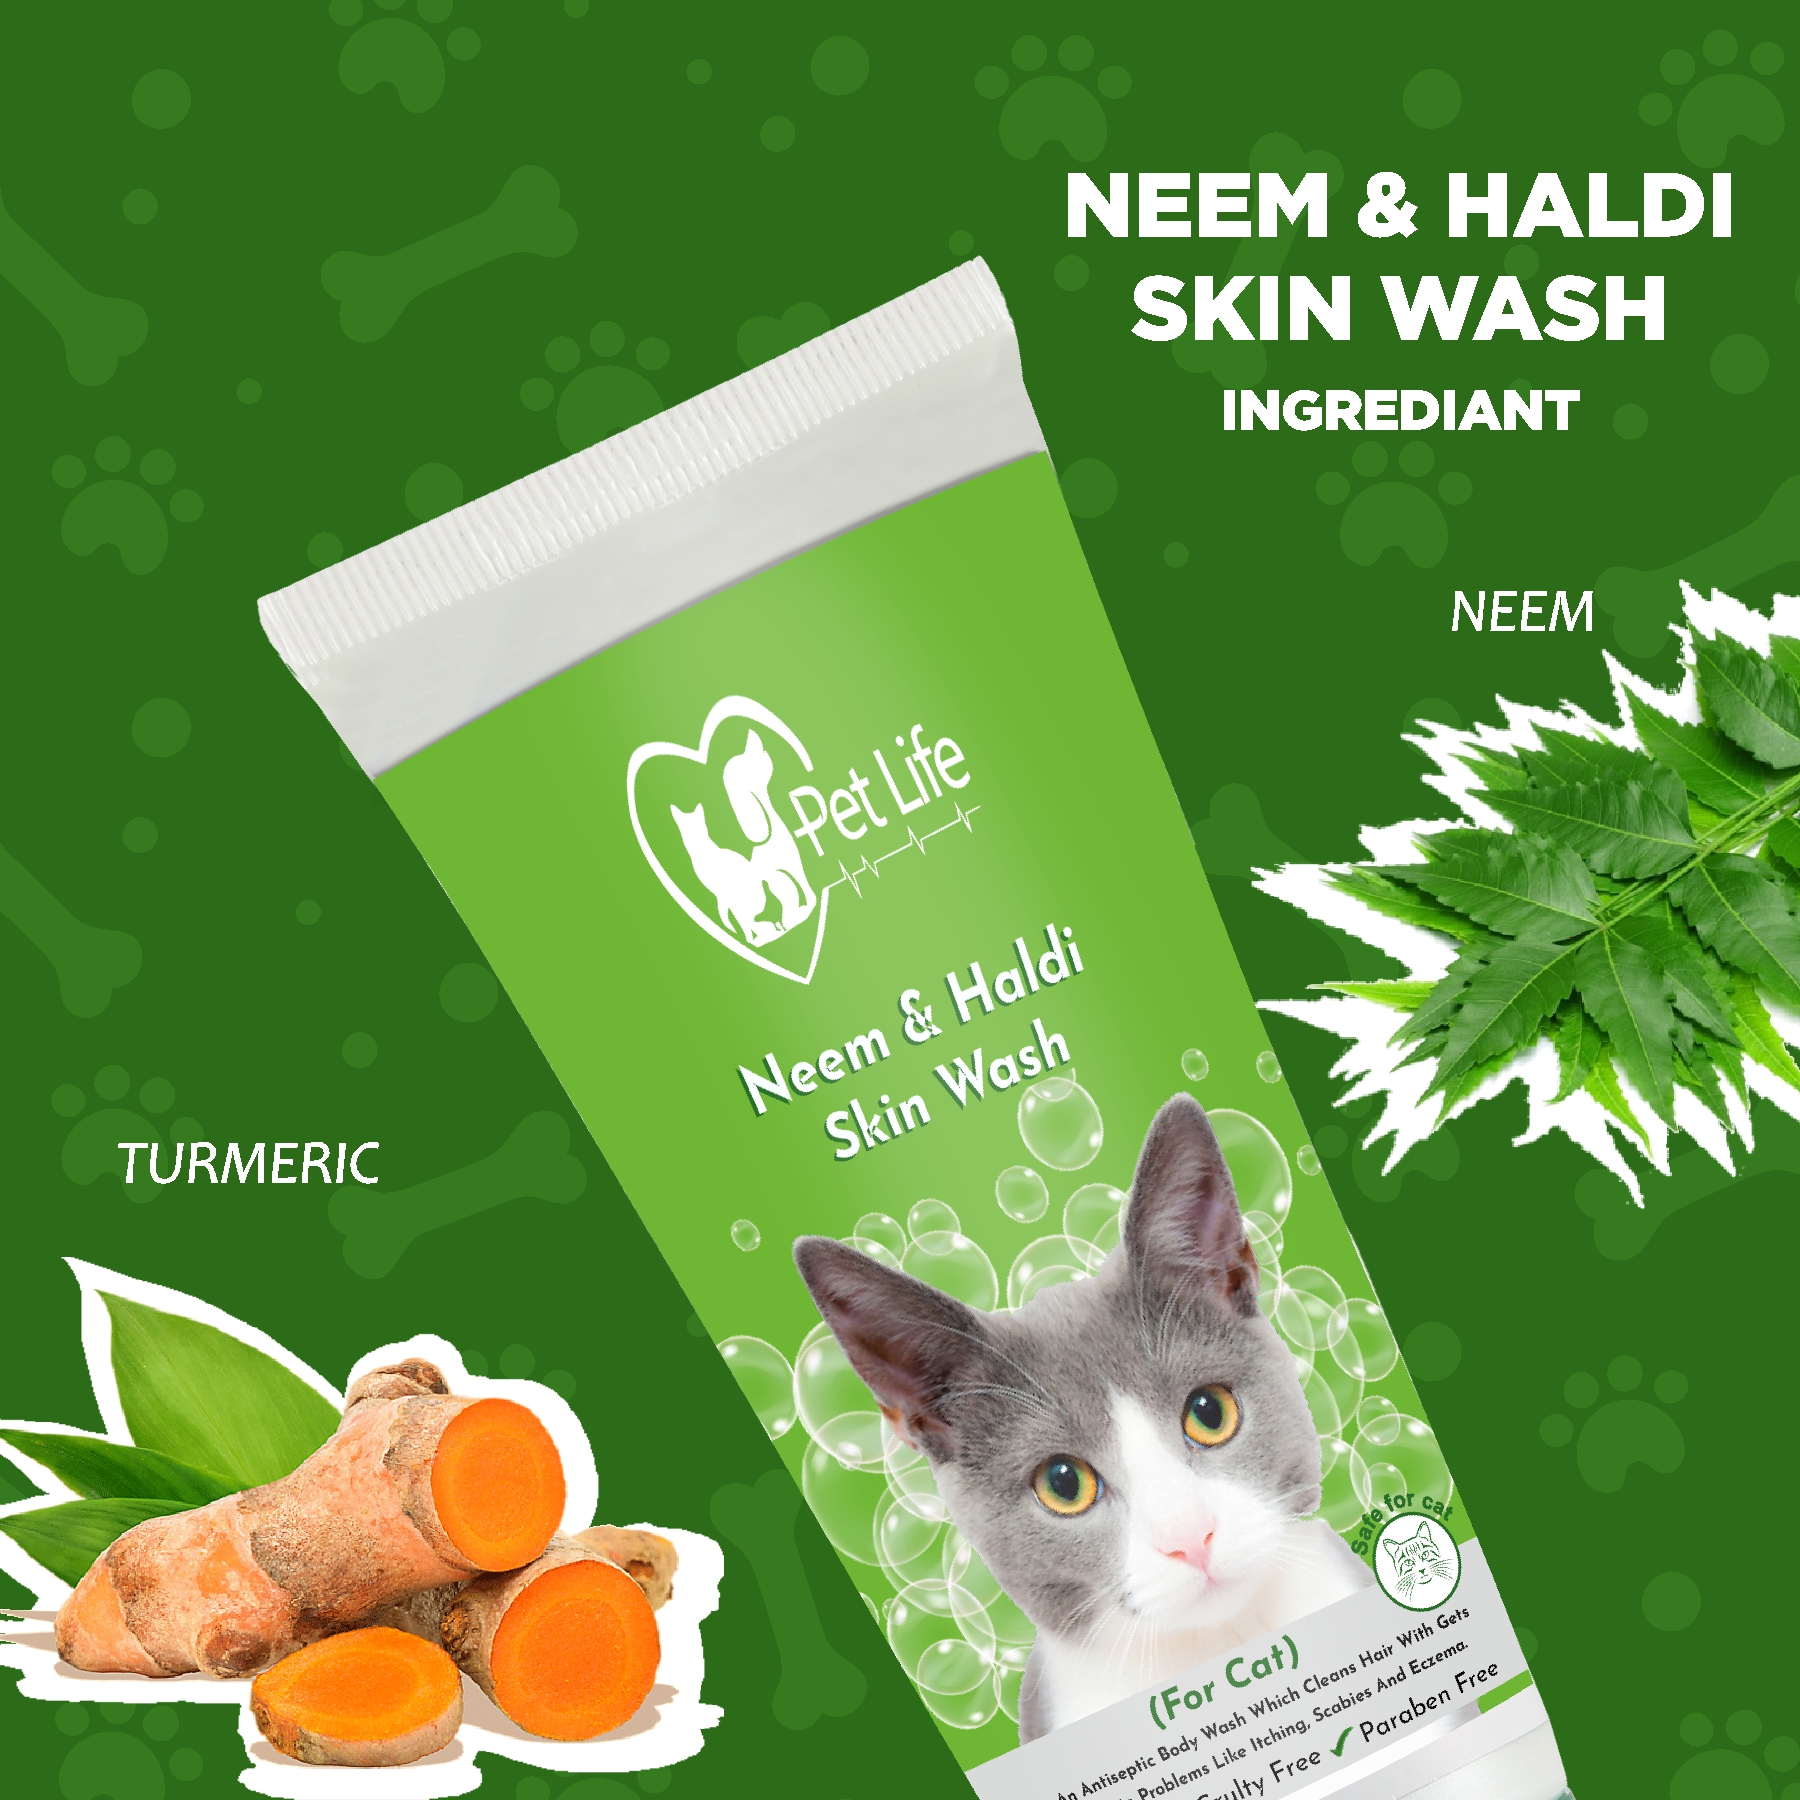 Organic Haldi Neem Skinwash for All Cat Breed